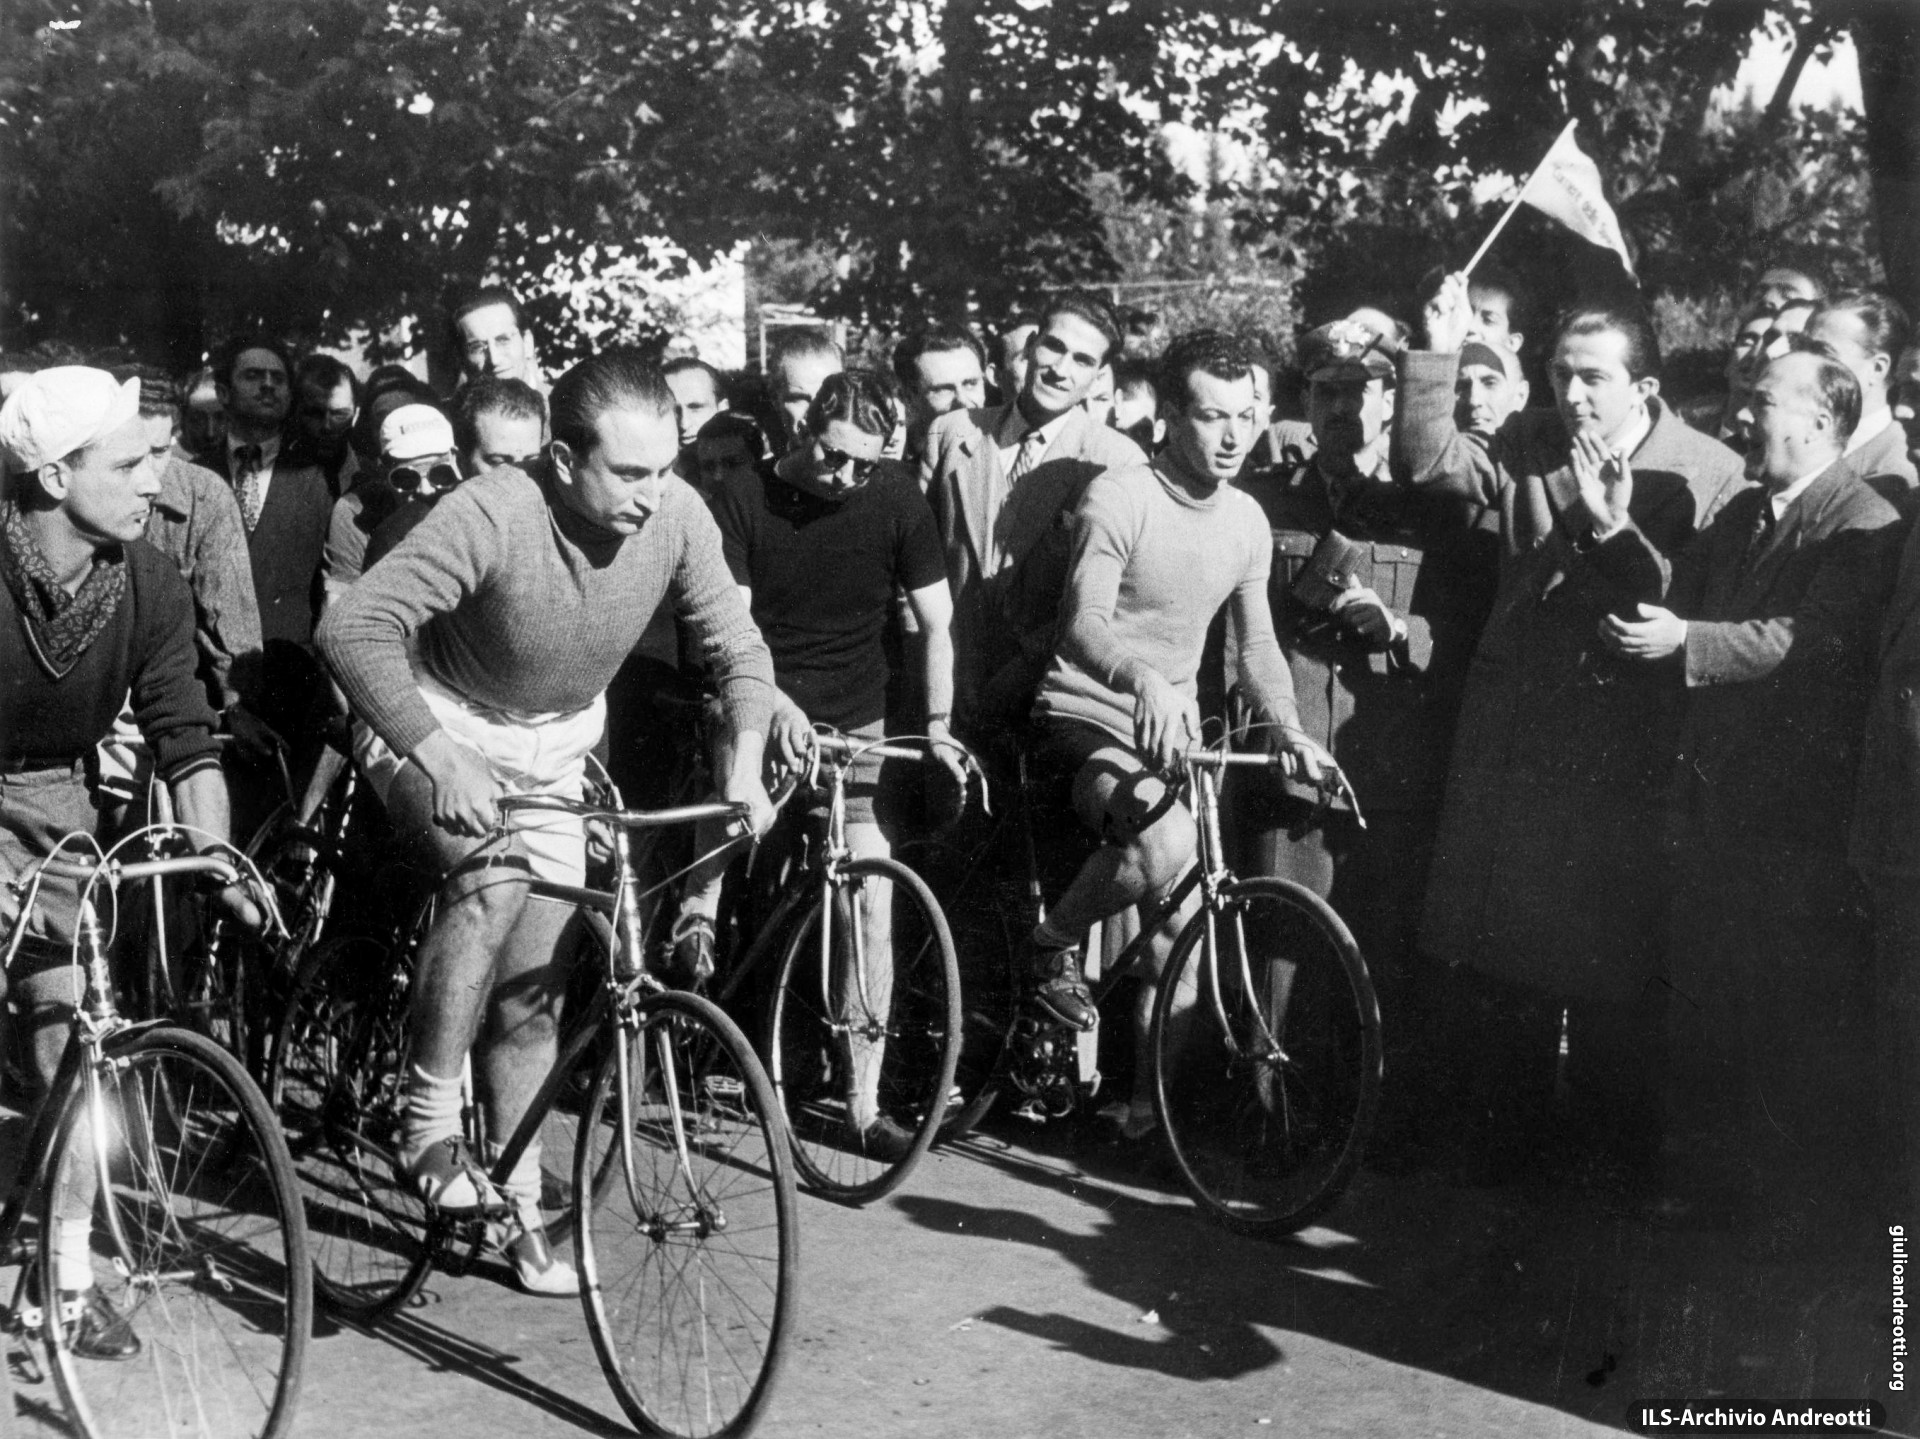 1948. Gara ciclistica fra giornalisti sportivi